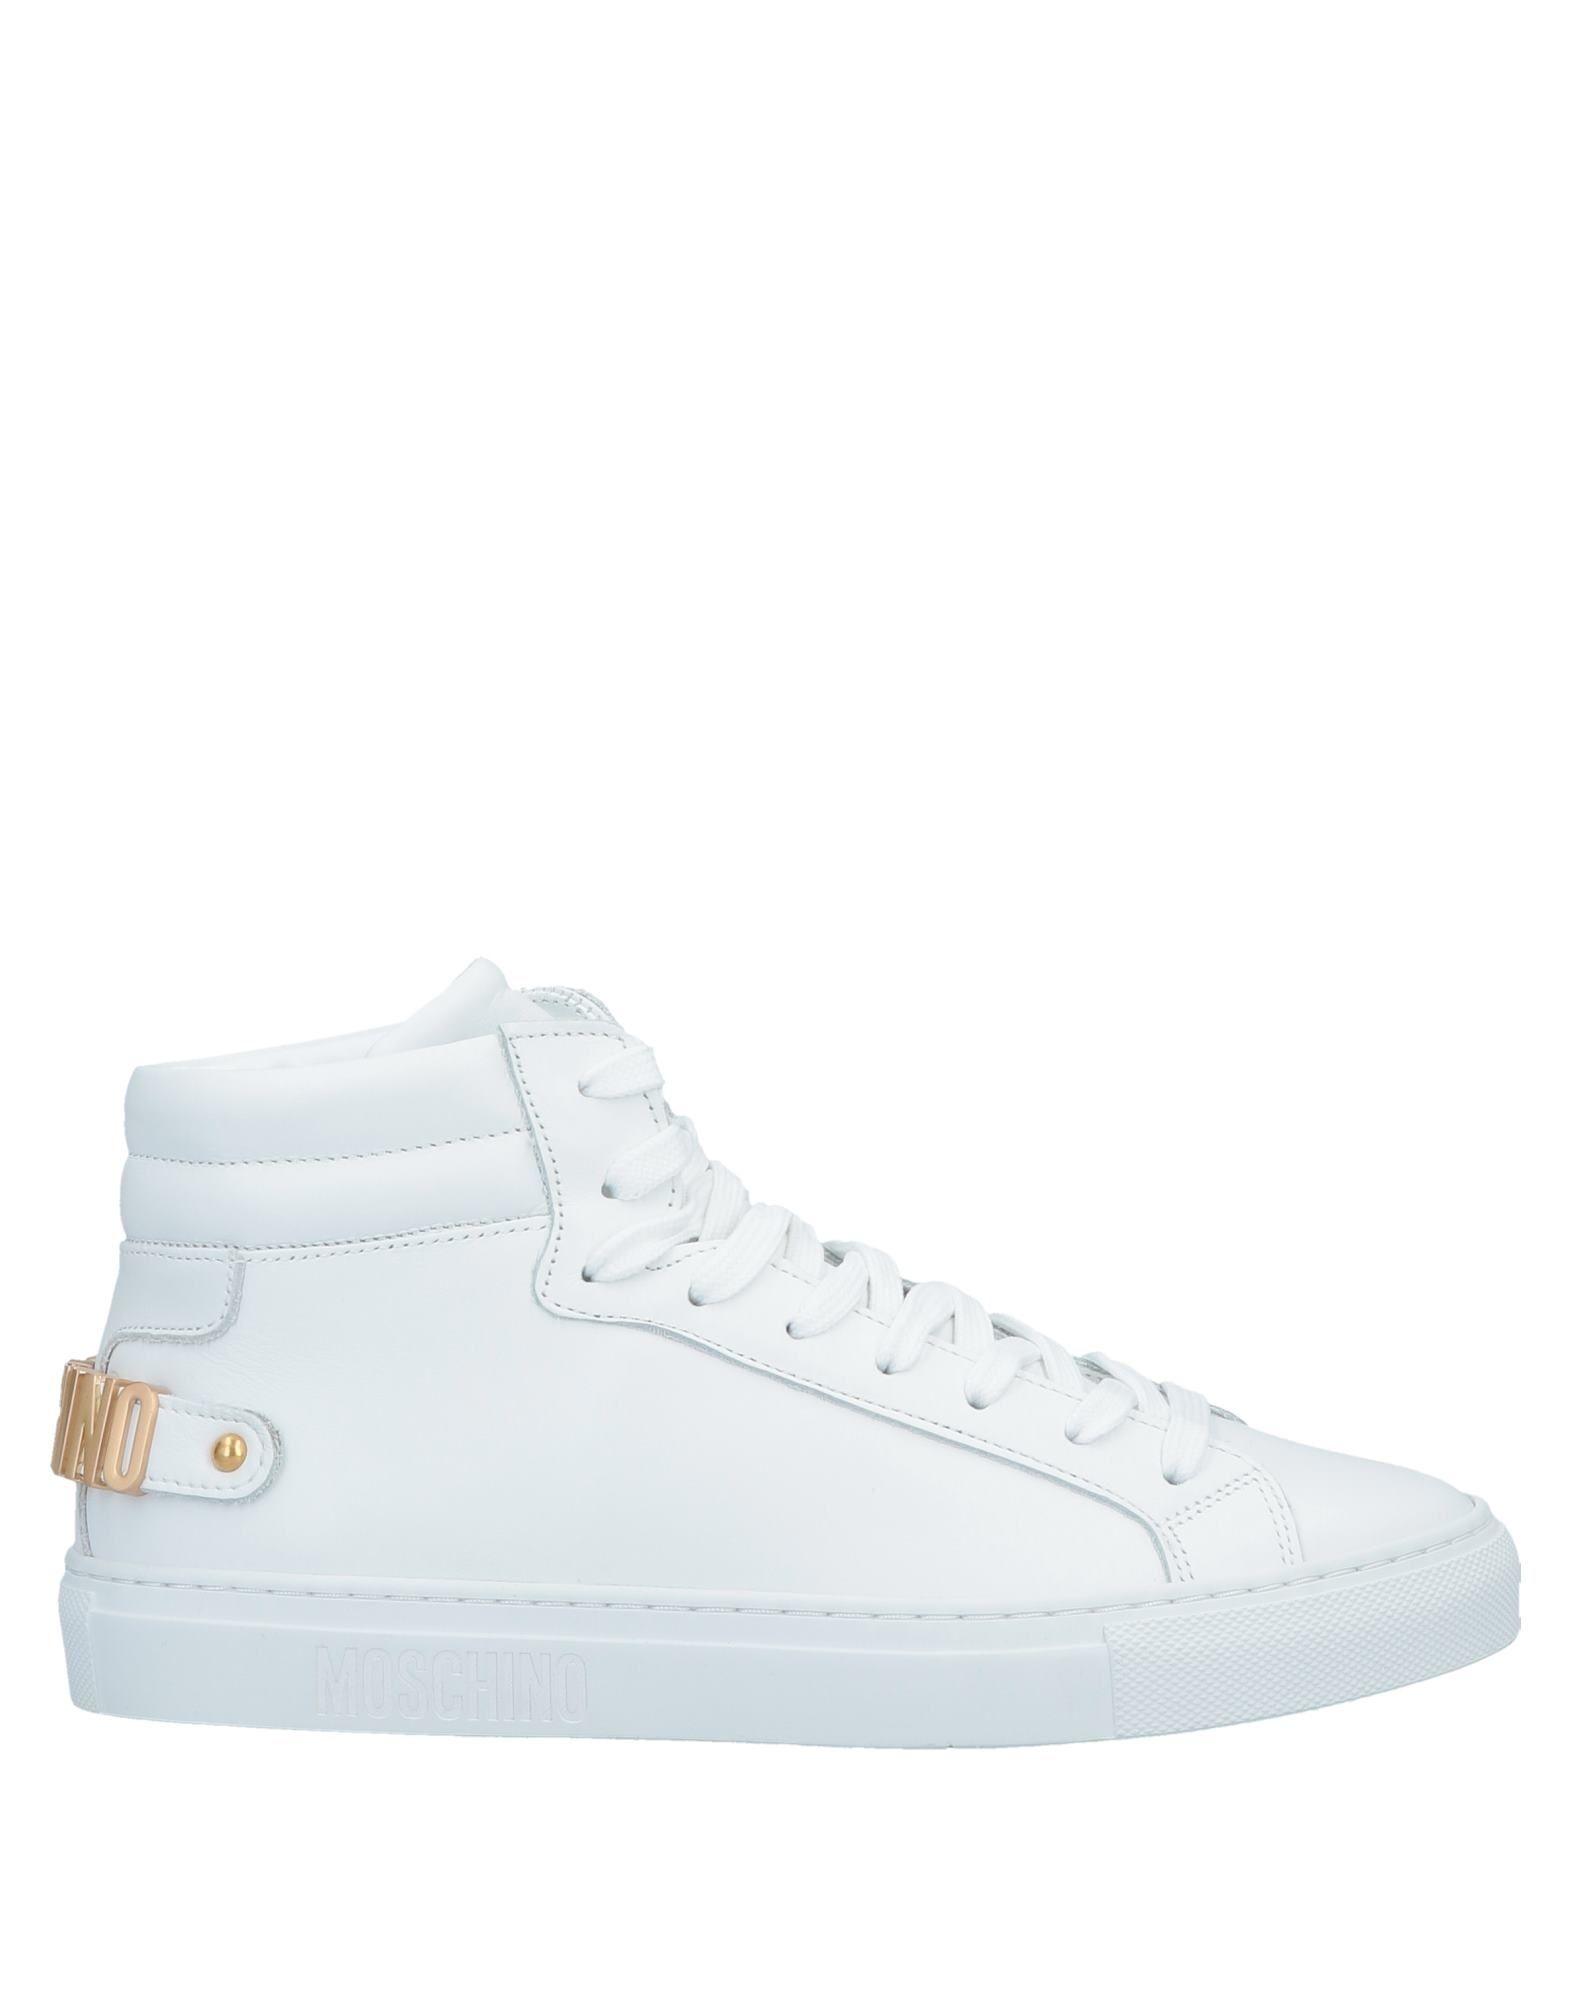 Moschino High-tops \u0026 Sneakers in White 